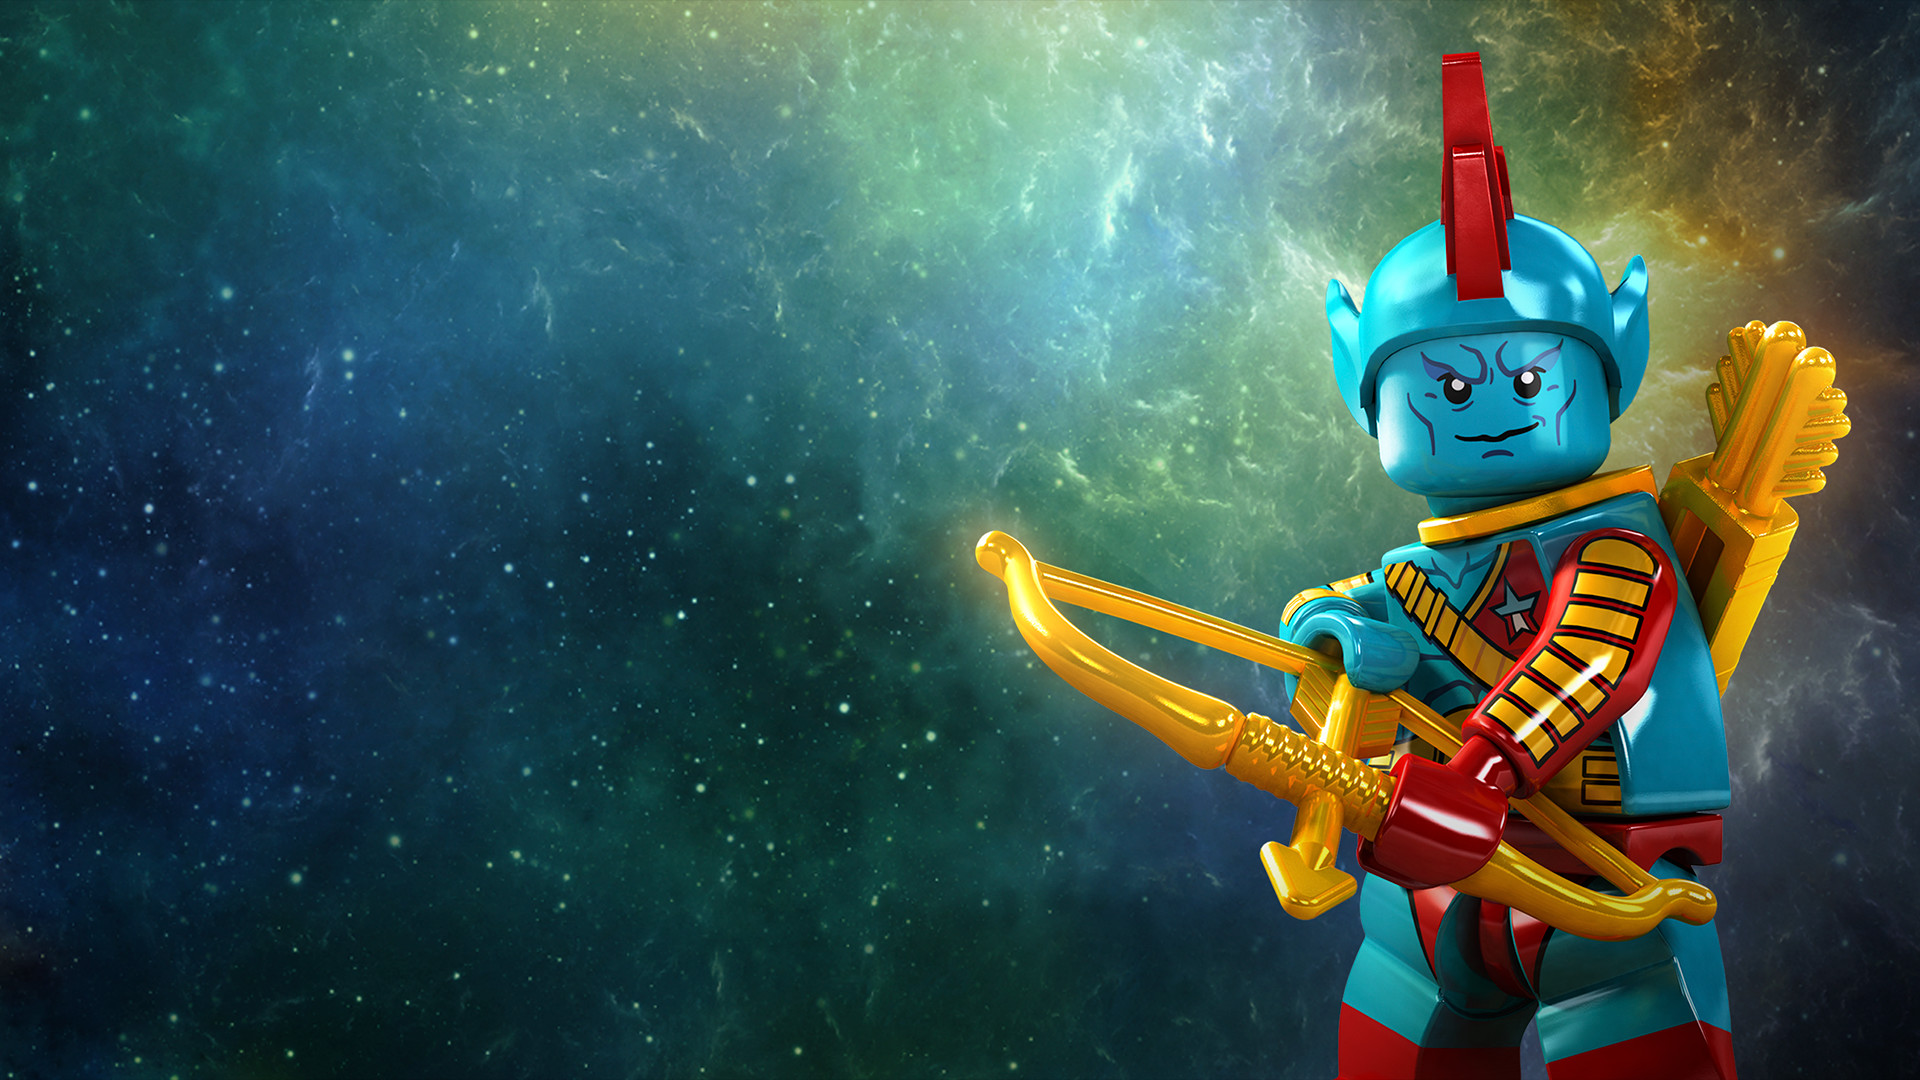 [$ 0.55] LEGO Marvel Super Heroes 2 - Classic Guardians of the Galaxy Character Pack DLC EU PS4 CD Key